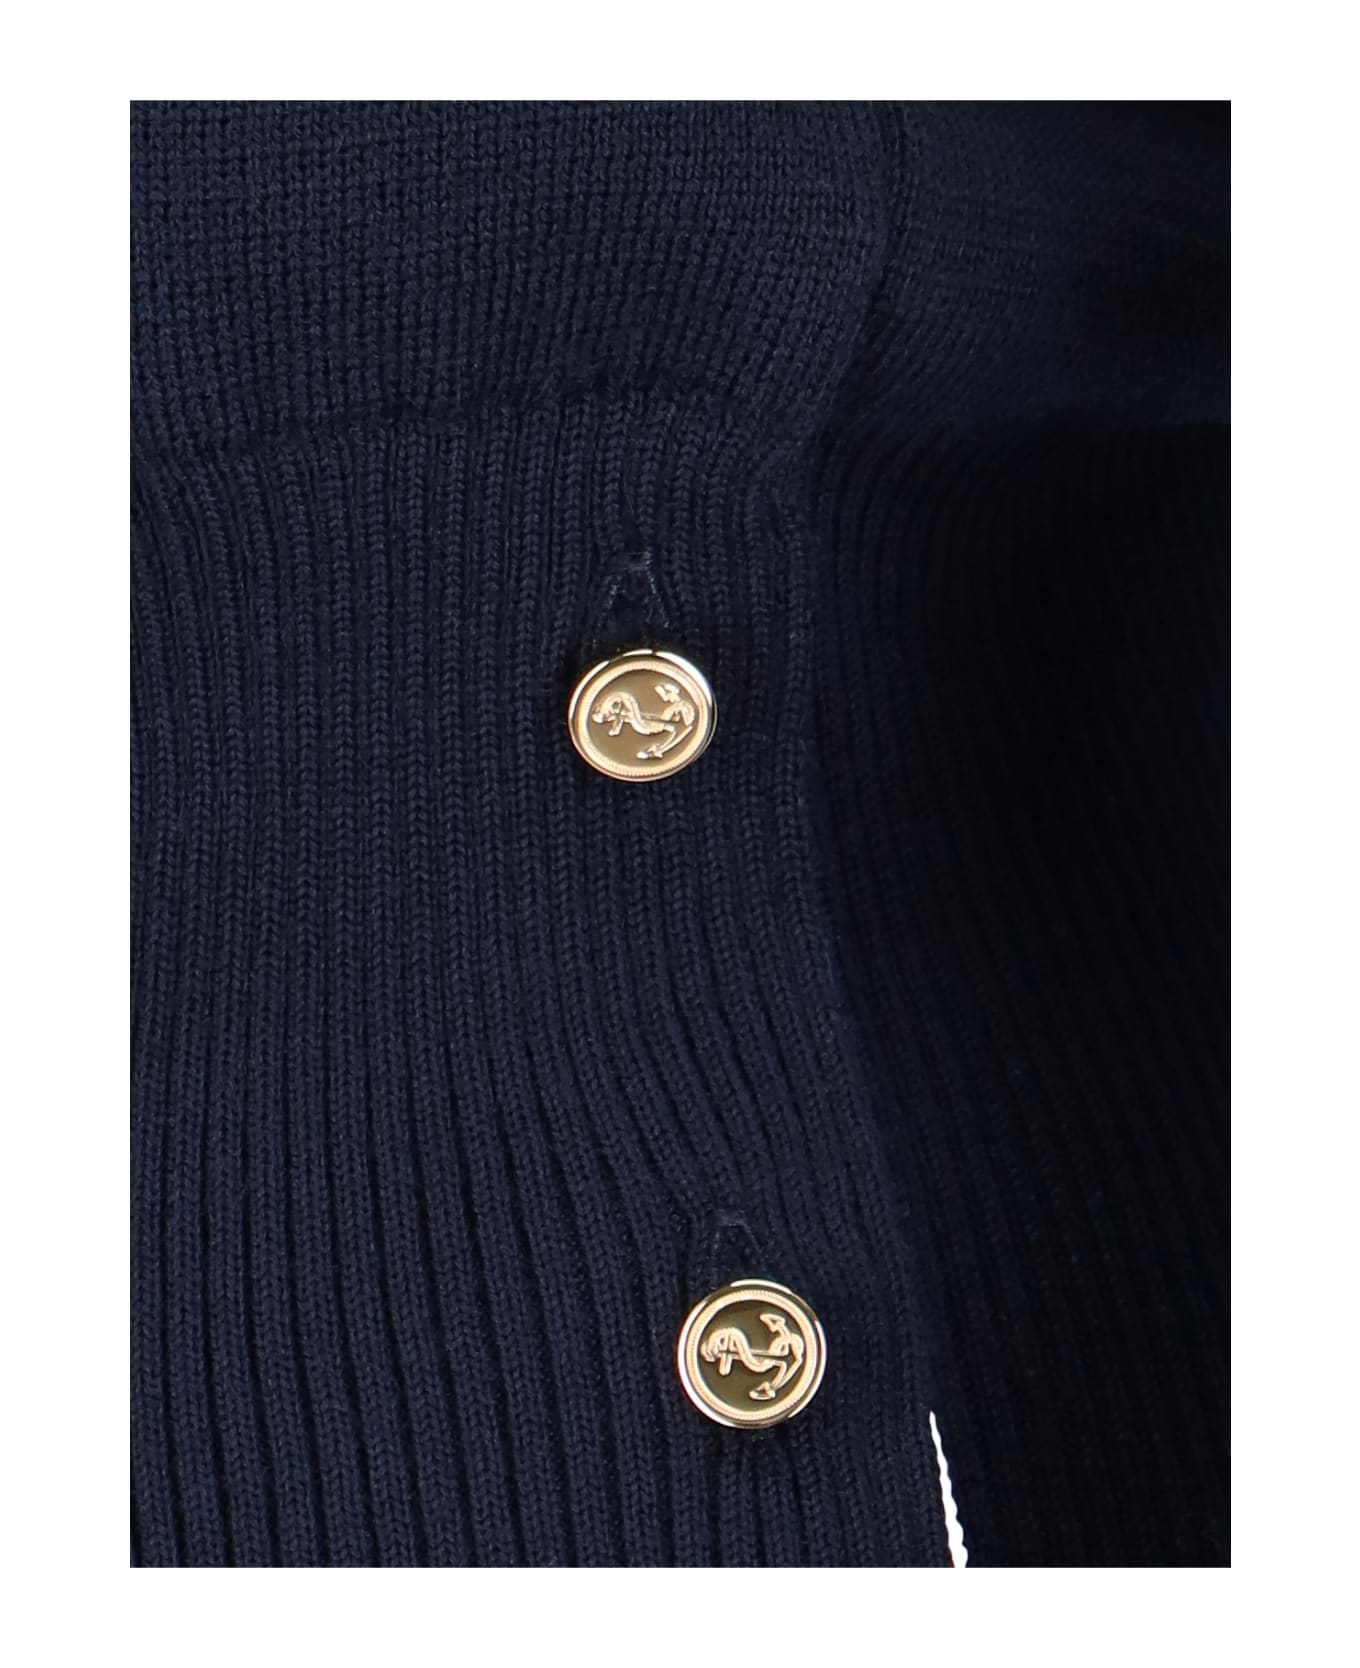 Thom Browne "4-bar" Sweater - Blue